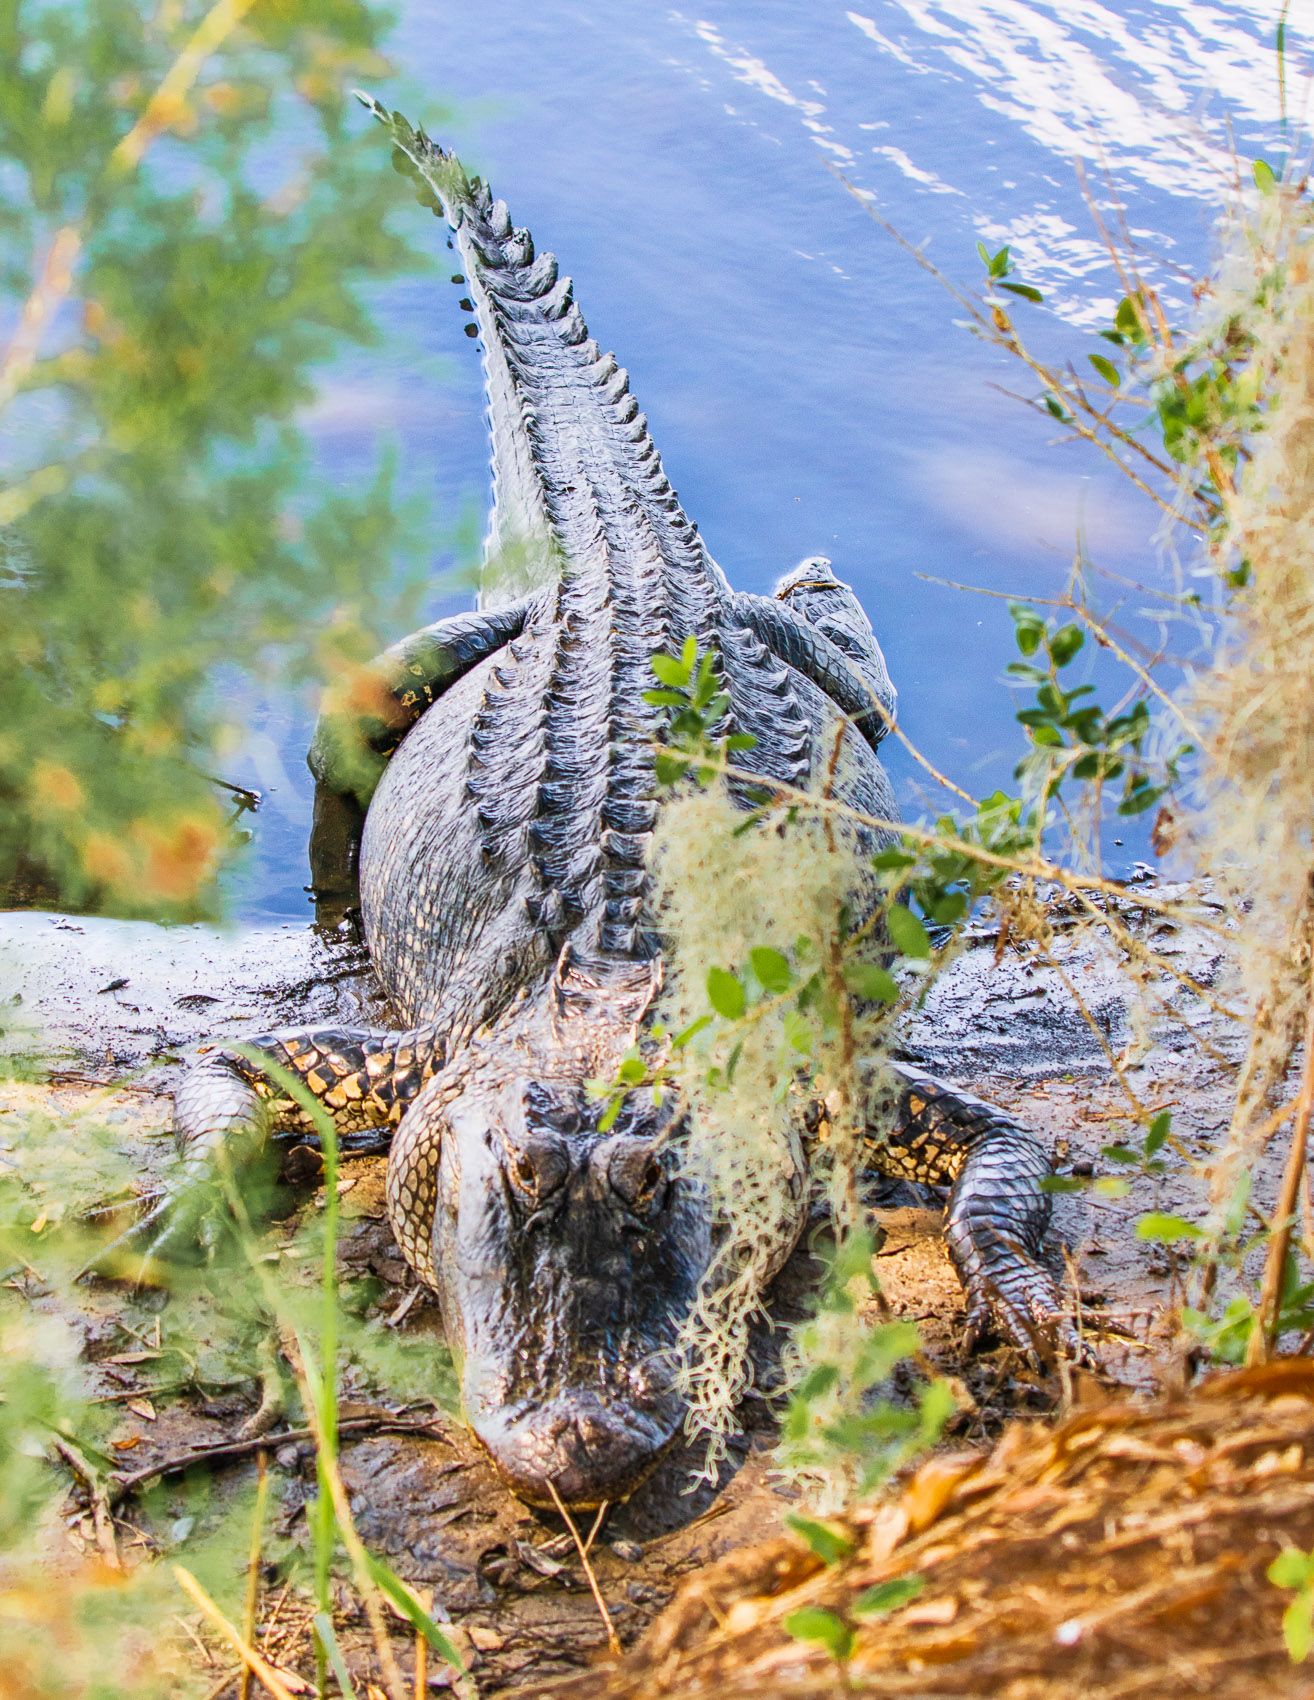 Alligators of Ace Basin, South Carolina-7.jpg